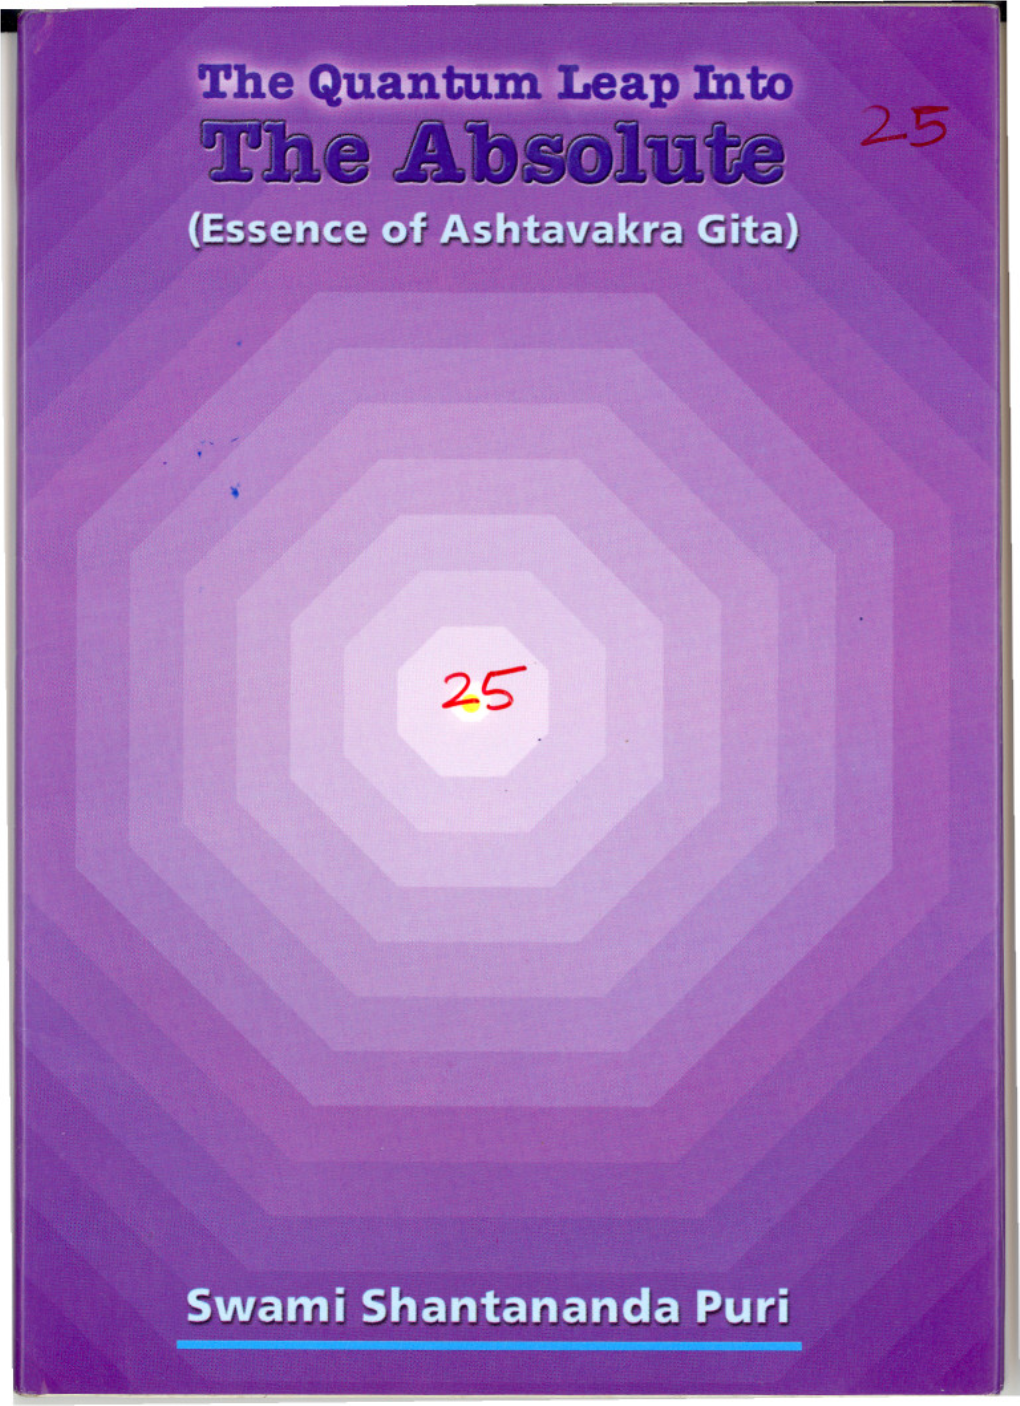 The Quantum Leap Into the Absolute: Essence of Ashtavakra Gita